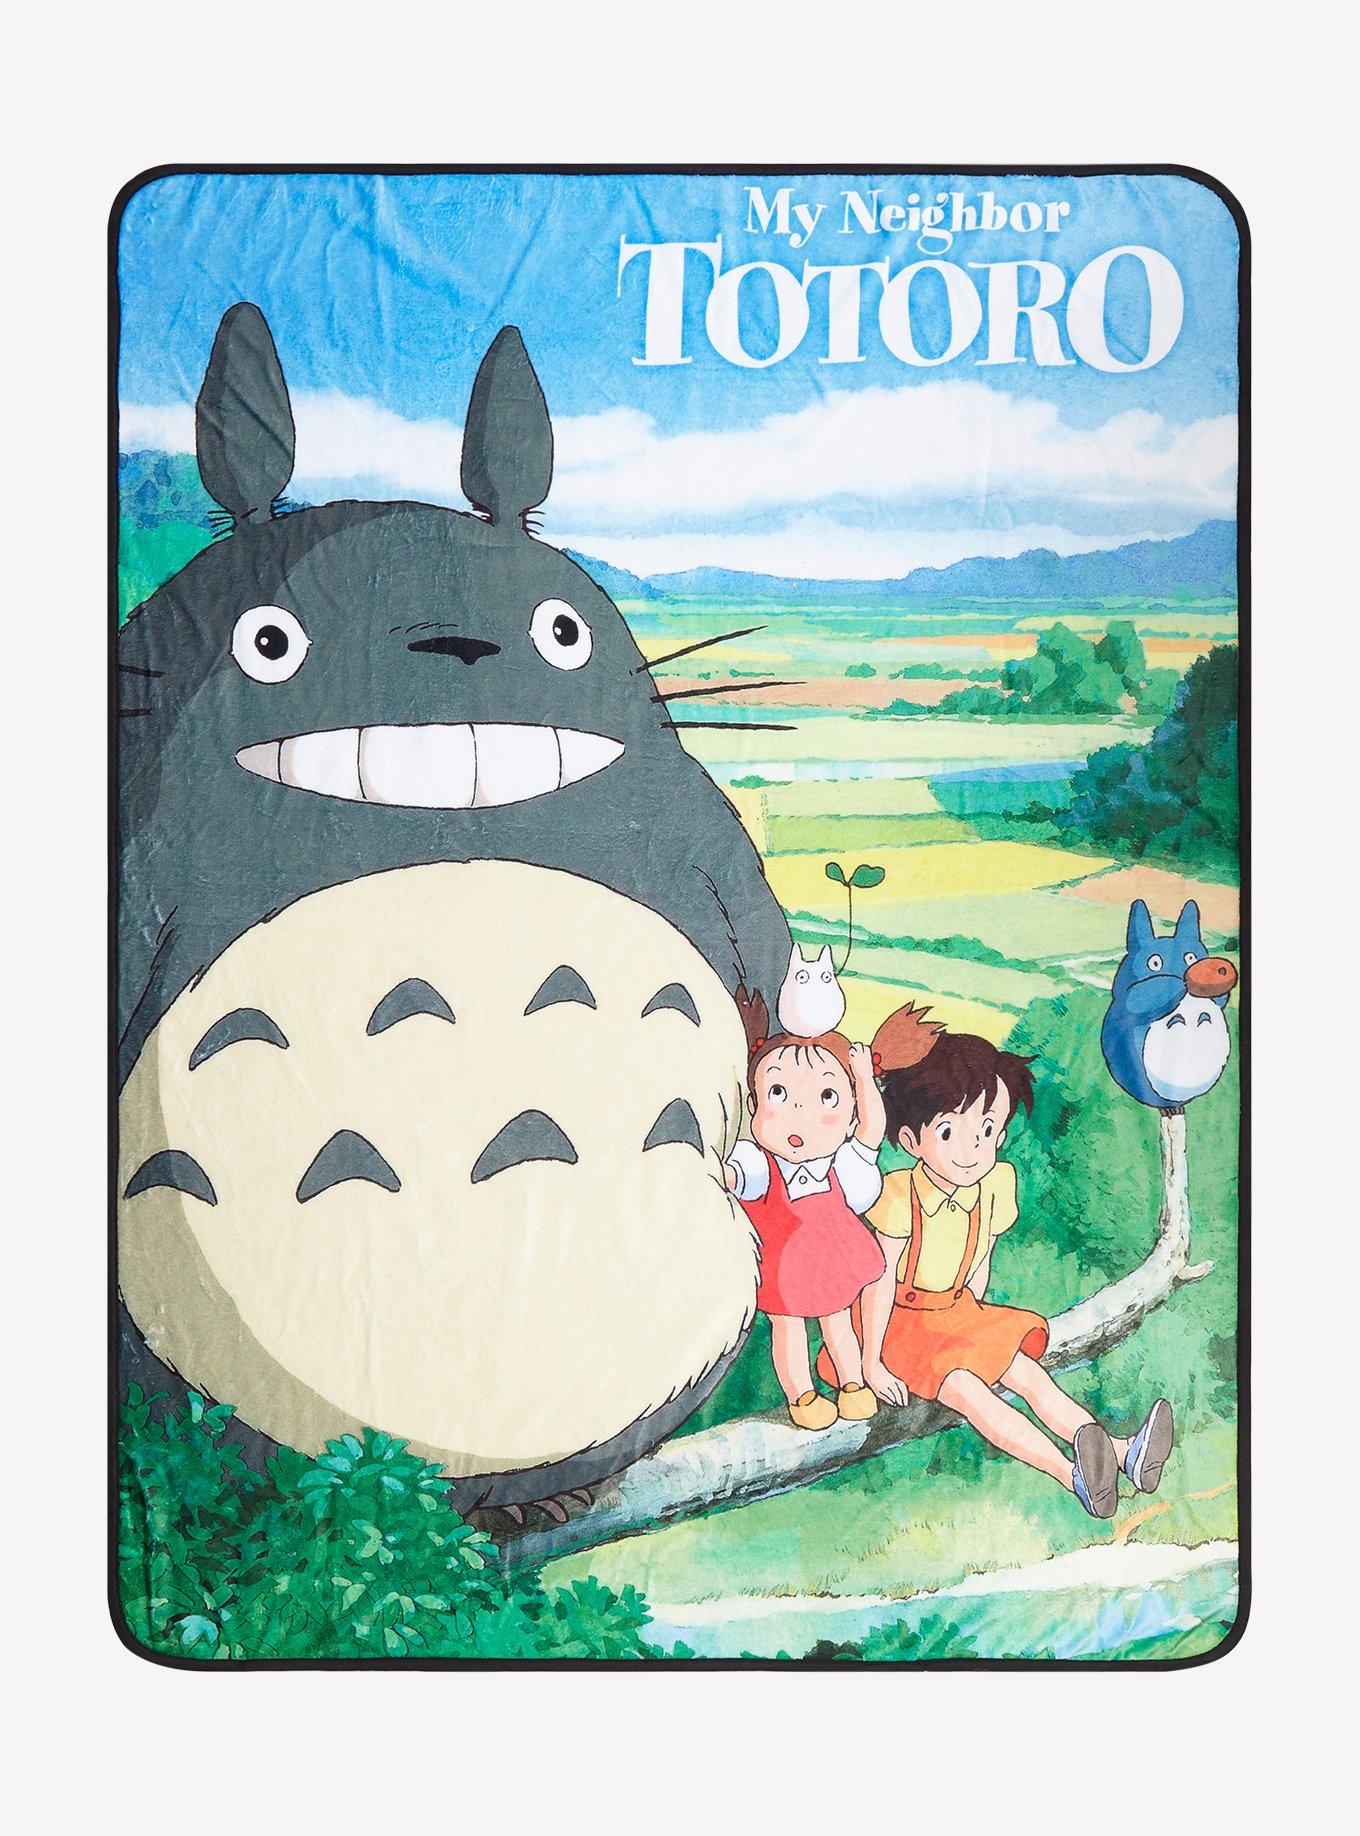 My Neighbor Totoro Winter Slippers Plush Toy - Ghibli Merch Store -  Official Studio Ghibli Merchandise